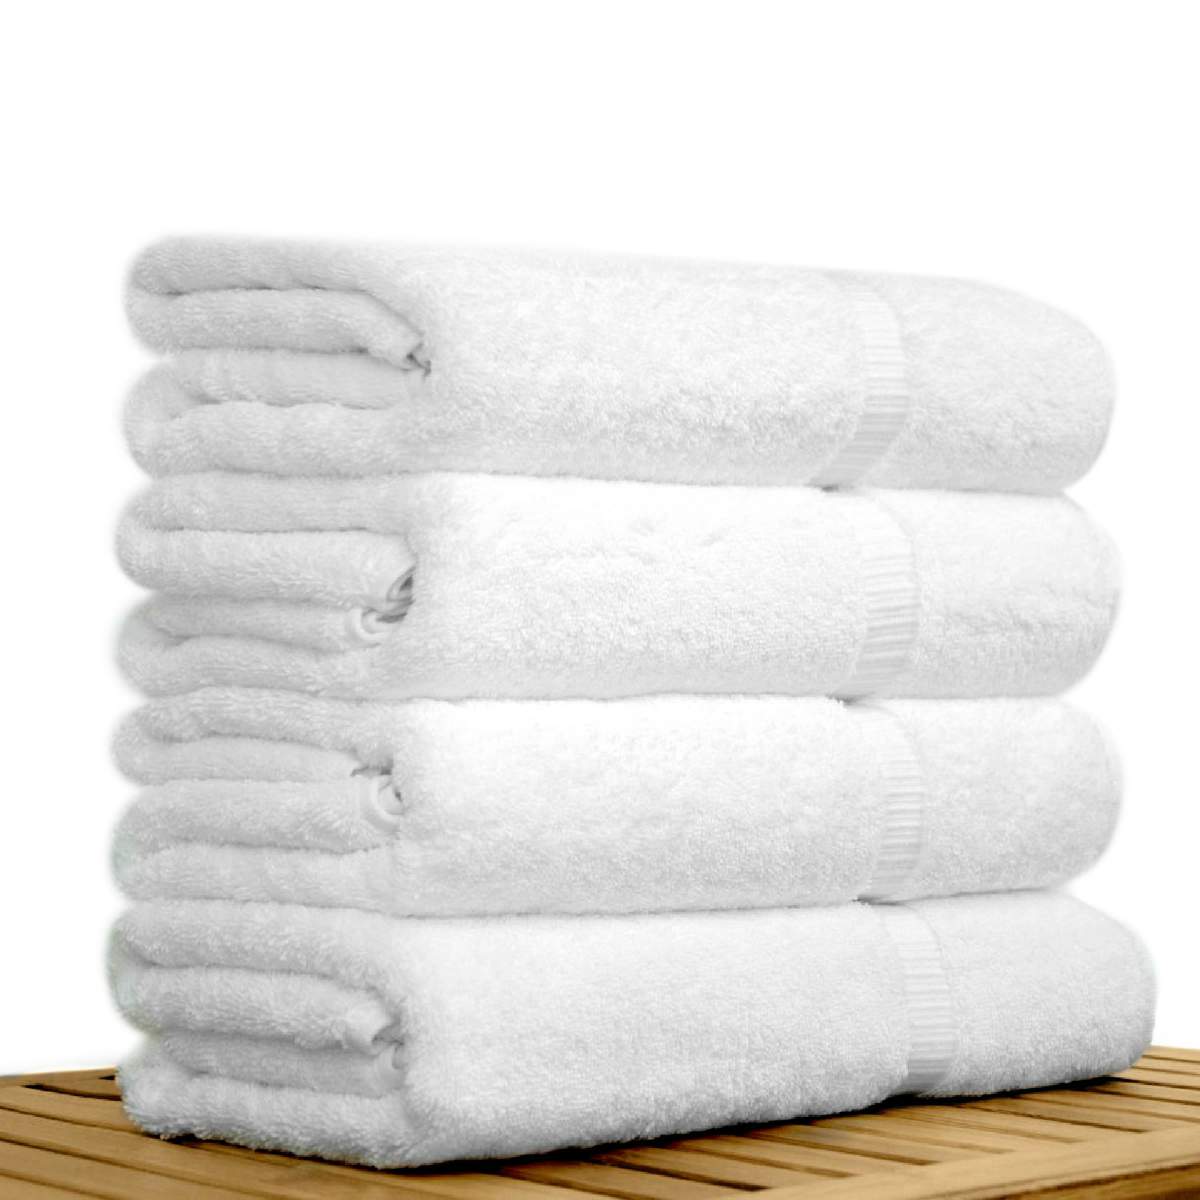 https://robemart.com/blog/wp-content/webpc-passthru.php?src=https://robemart.com/blog/wp-content/uploads/2019/09/27-x-54-17-lbs-doz-100-turkish-cotton-bamboo-blended-ultra-soft-white-bath-towel-turkish-towel.jpg&nocache=1